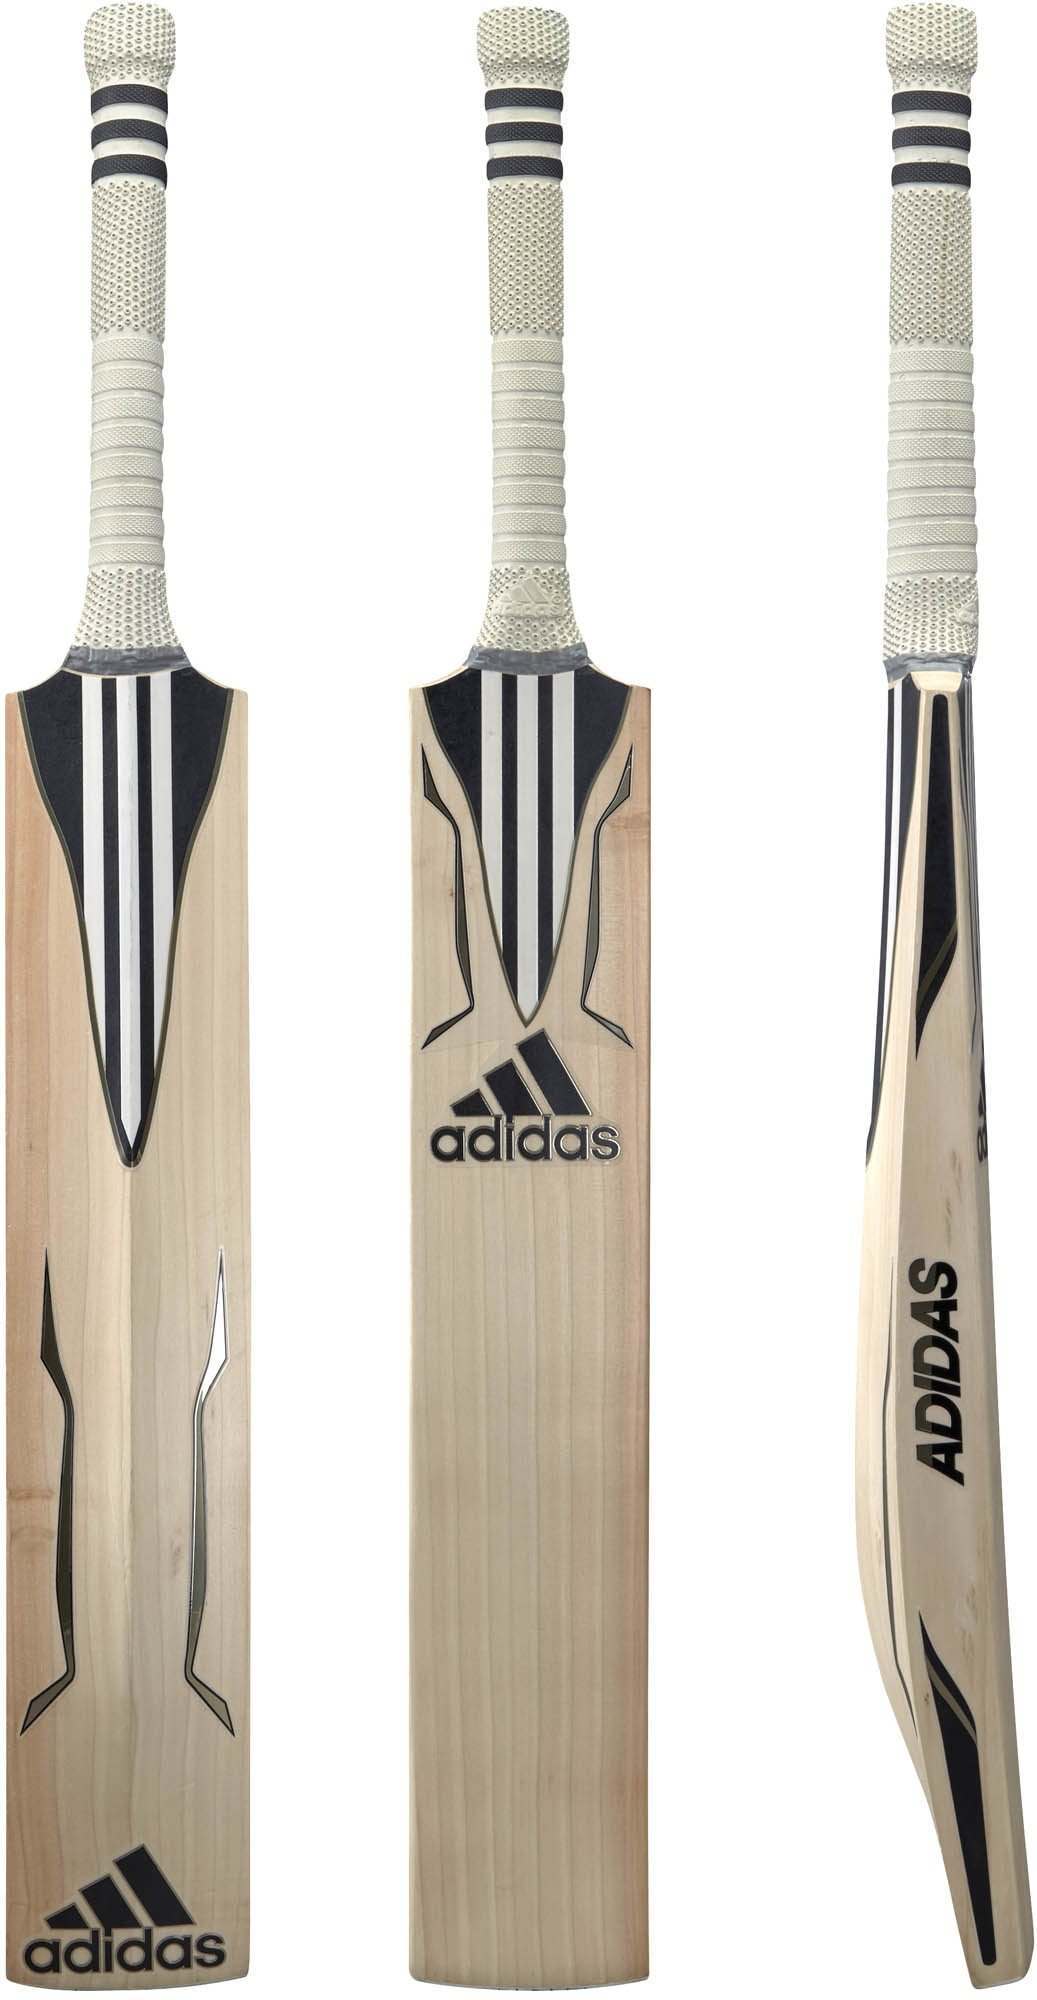 Adidas Cricket Bat Logo - 2017 Adidas XT Club Junior Cricket Bat - All Rounder Cricket